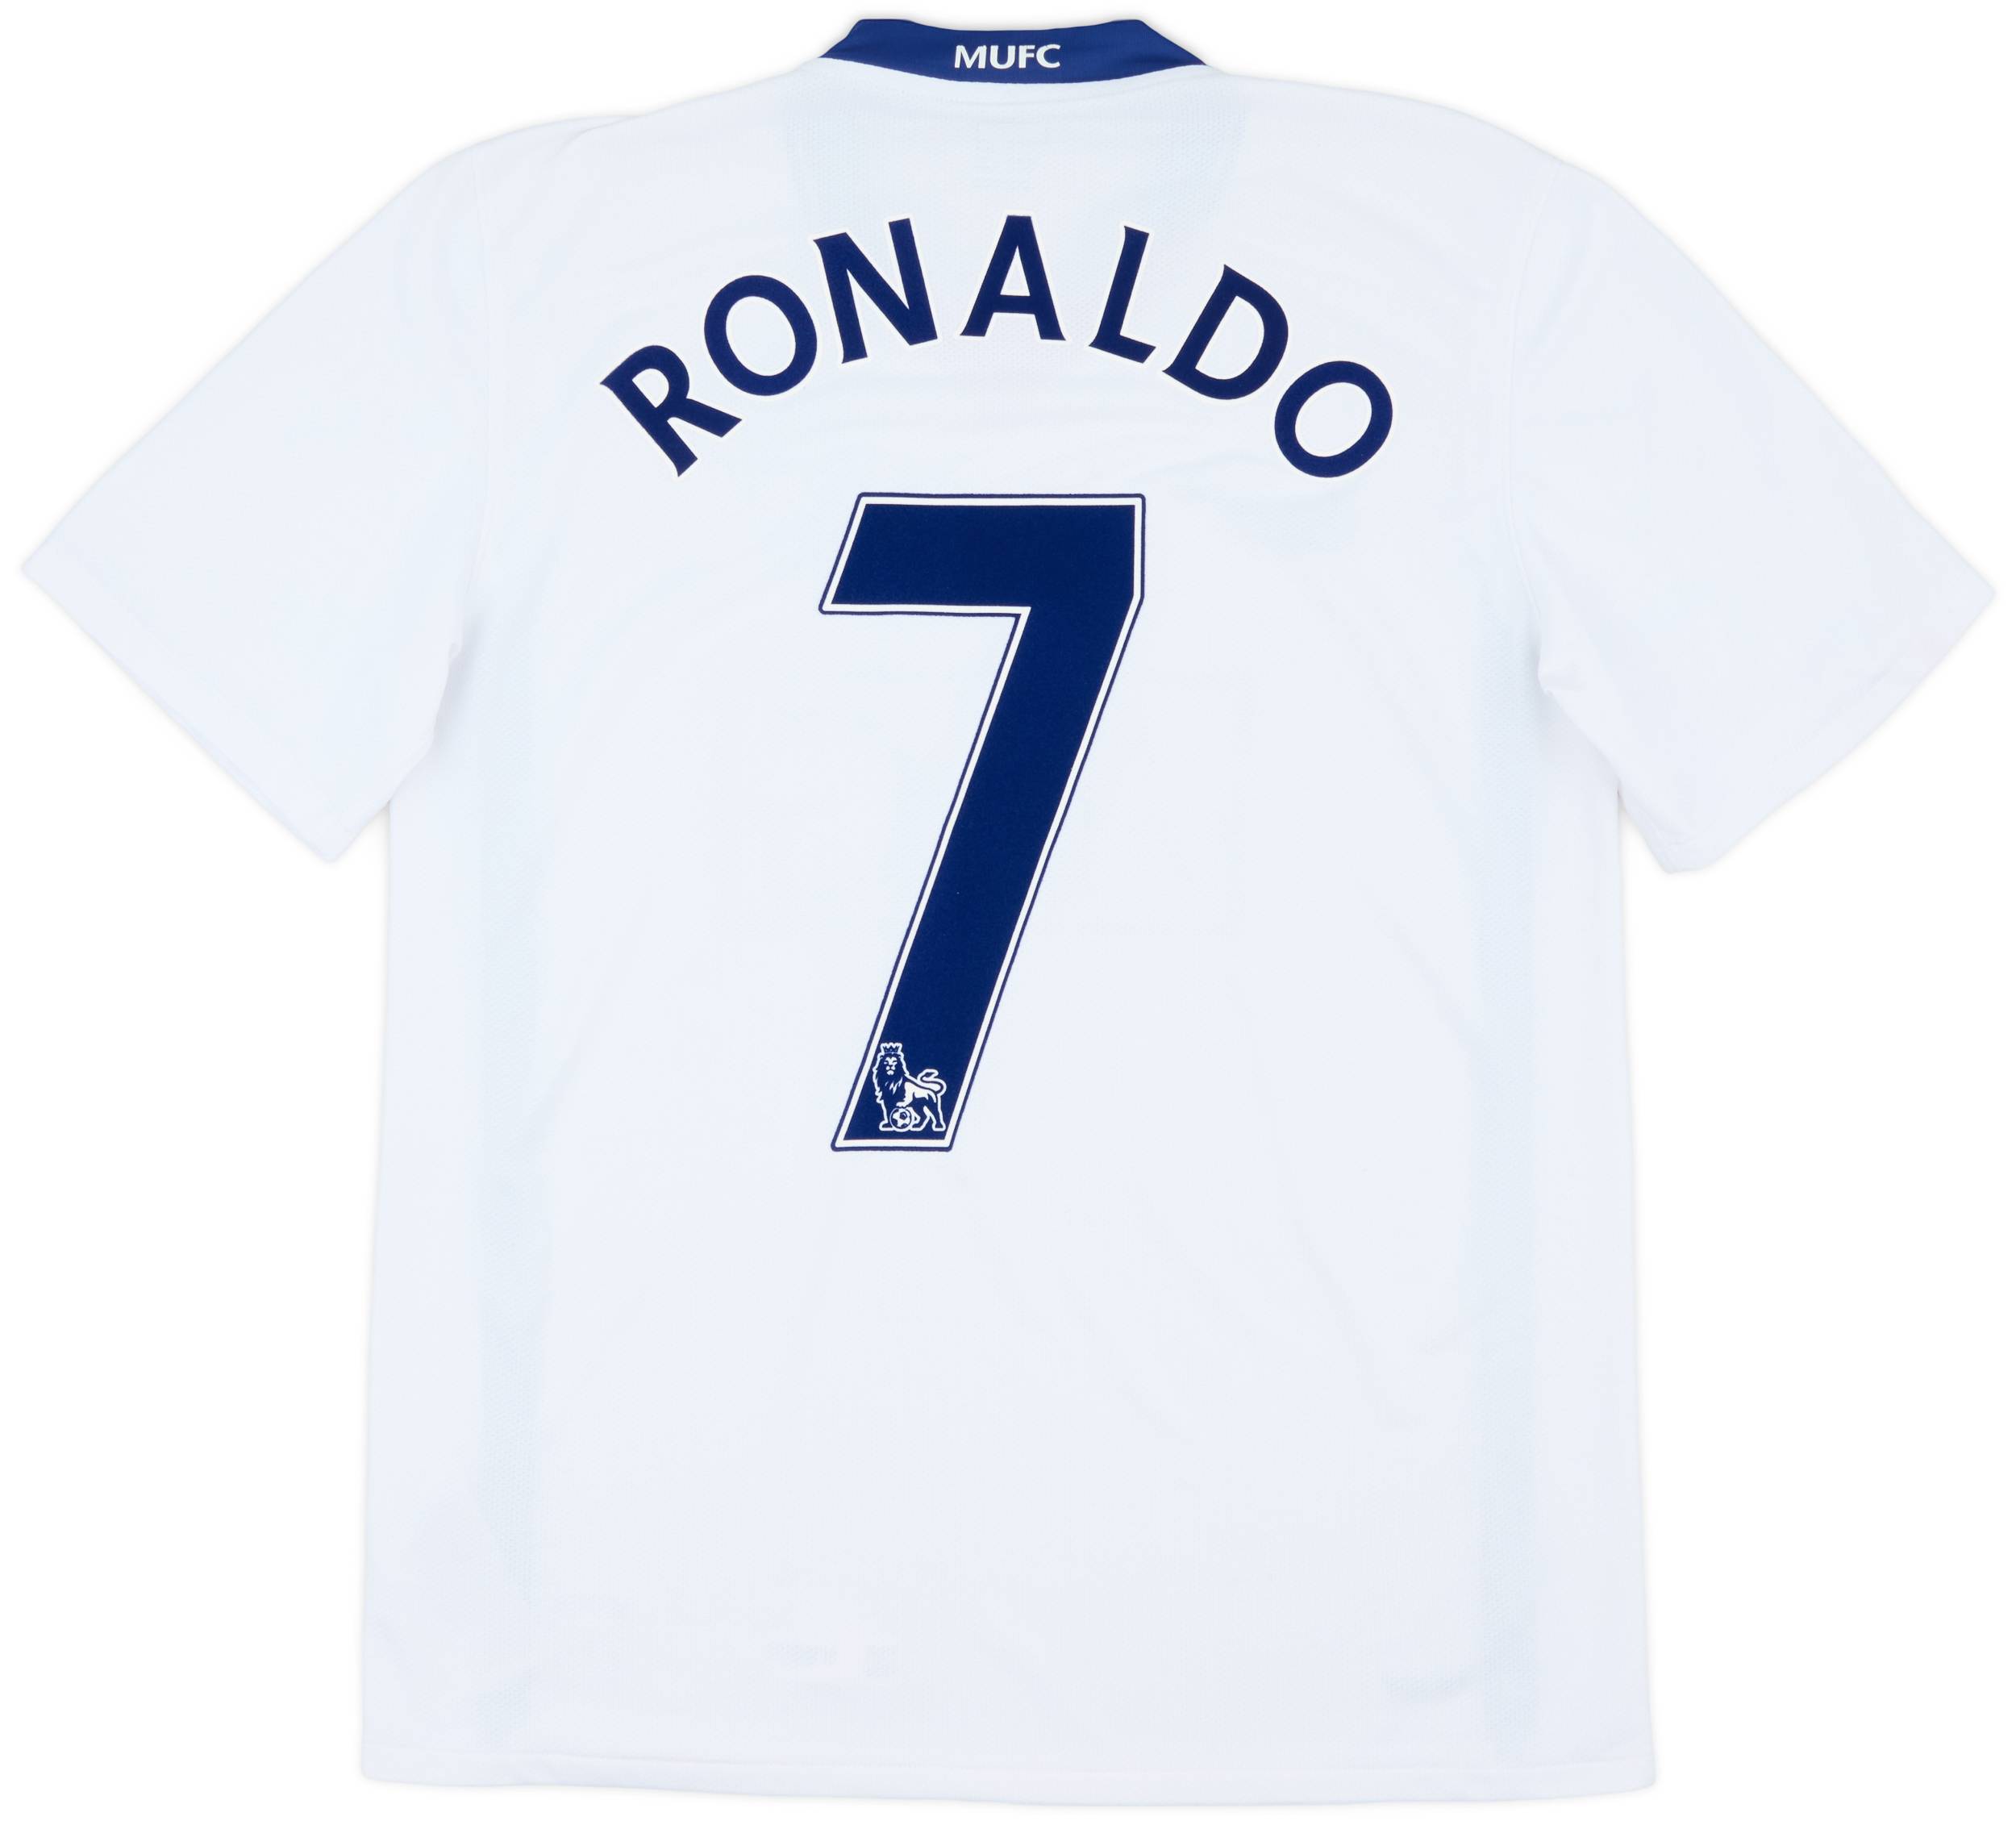 2008-10 Manchester United Away Shirt Ronaldo #7 - 6/10 - (S)